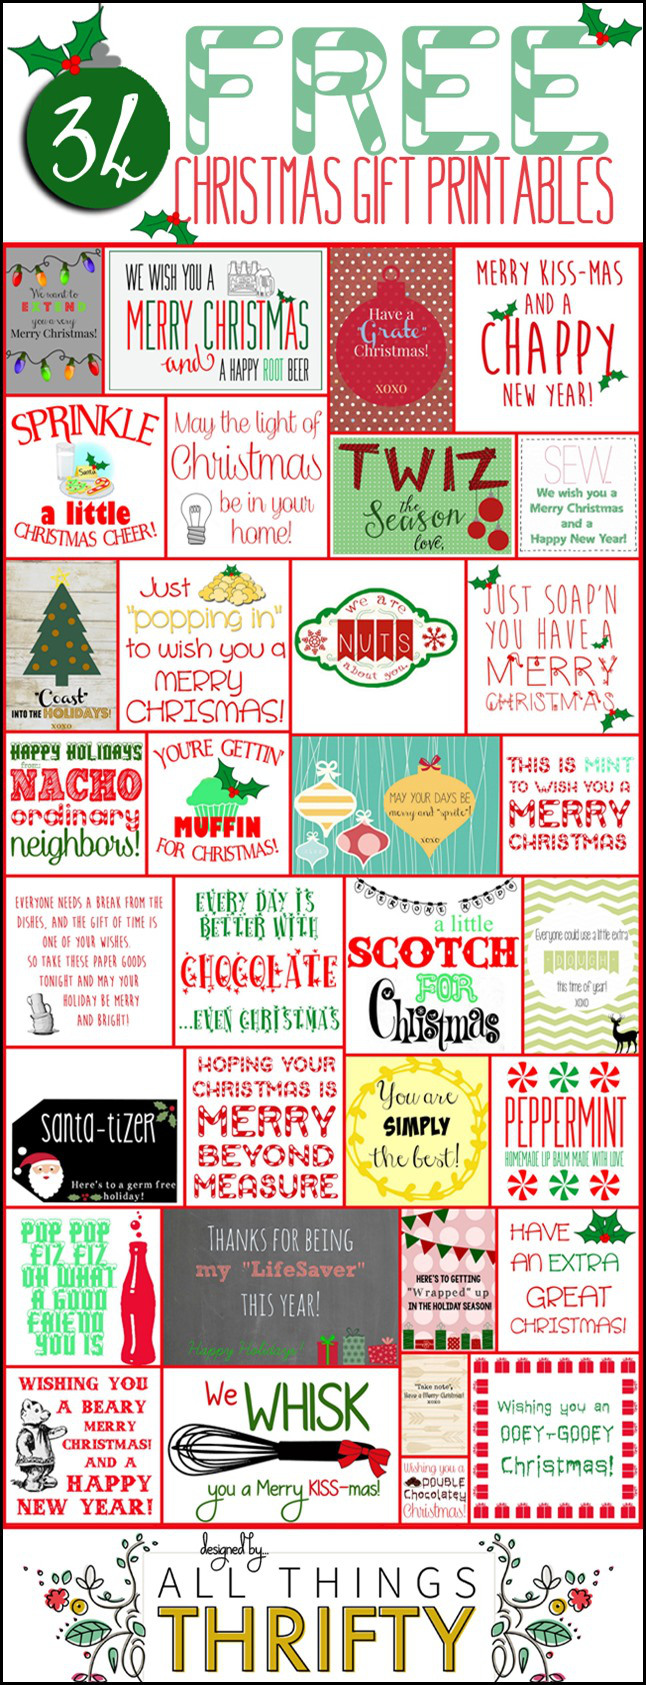 HAPPY Holidays: 34 Free Christmas Gift Tag Printables - Tatertots and Jello